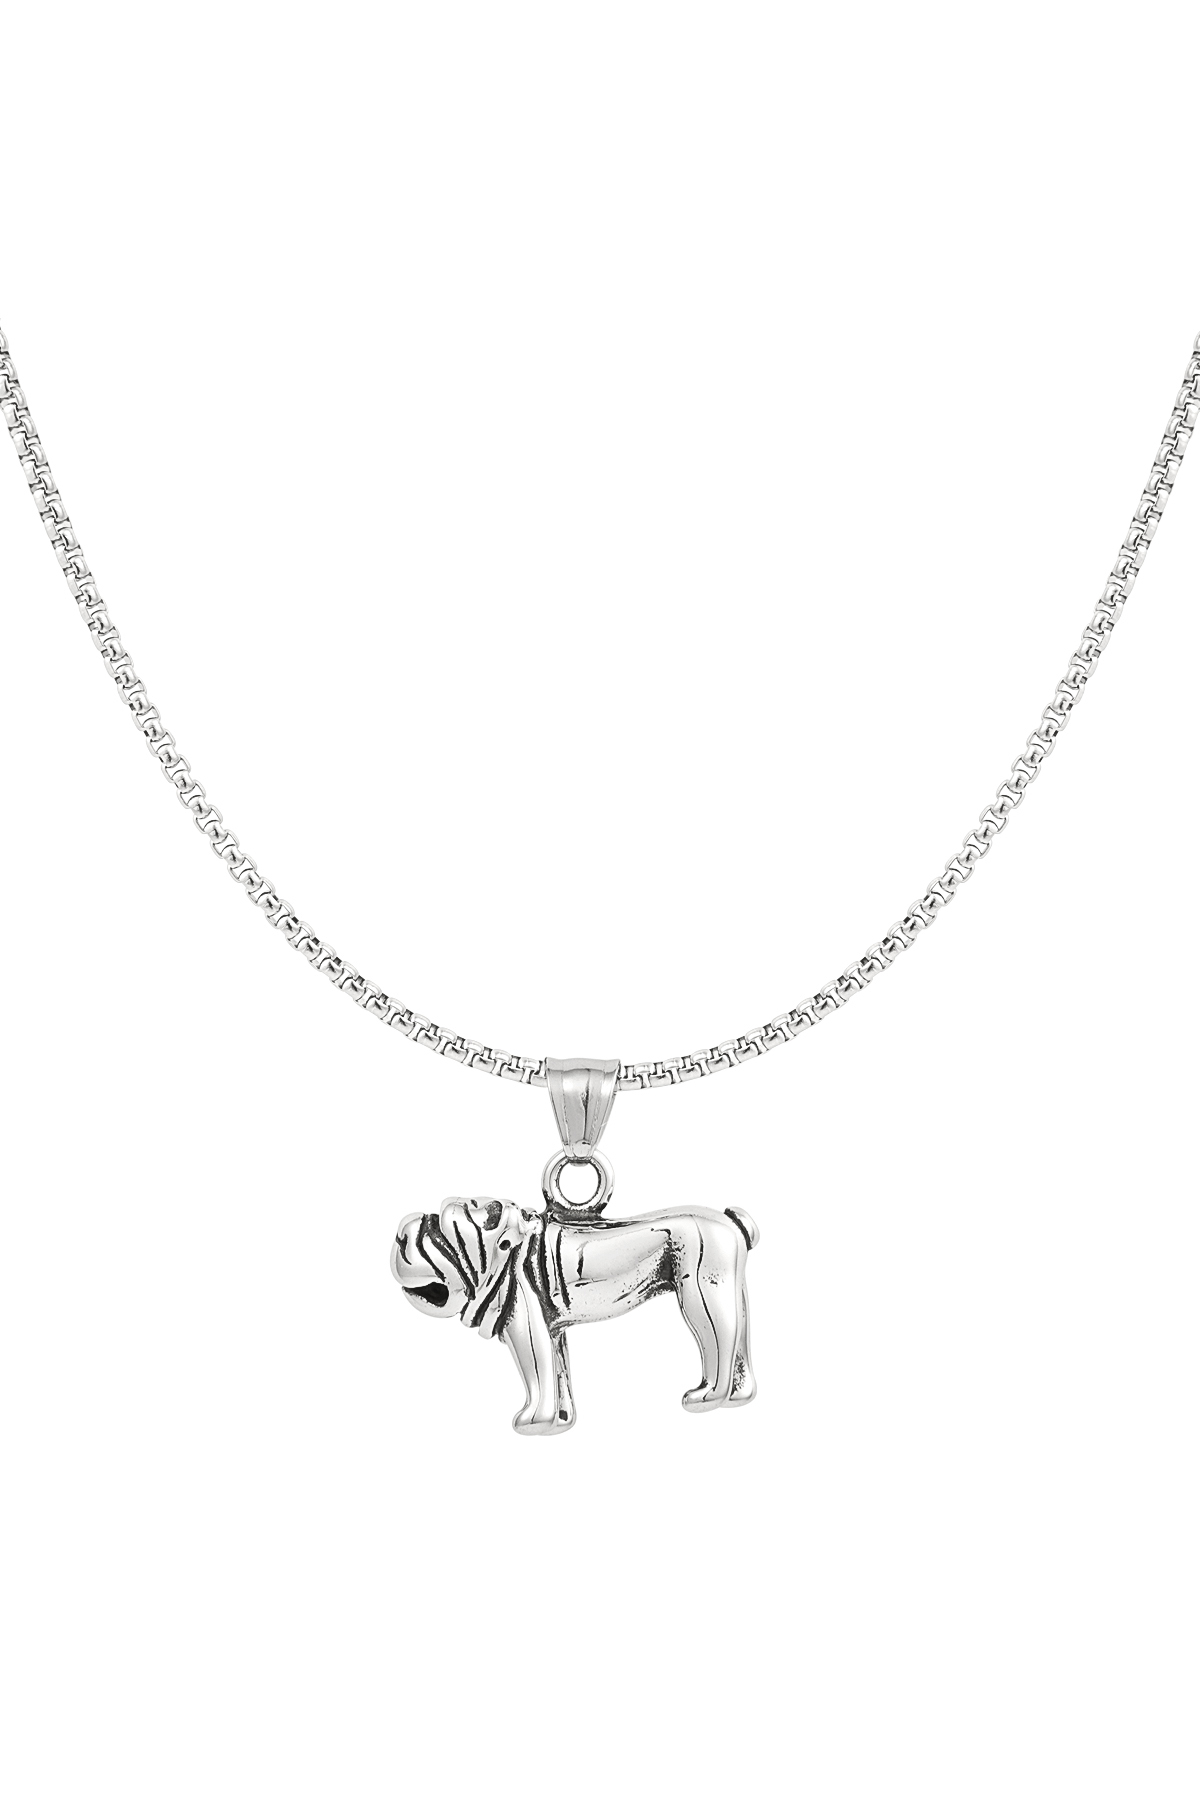 Herren-Bulldoggen-Halskette – Silber